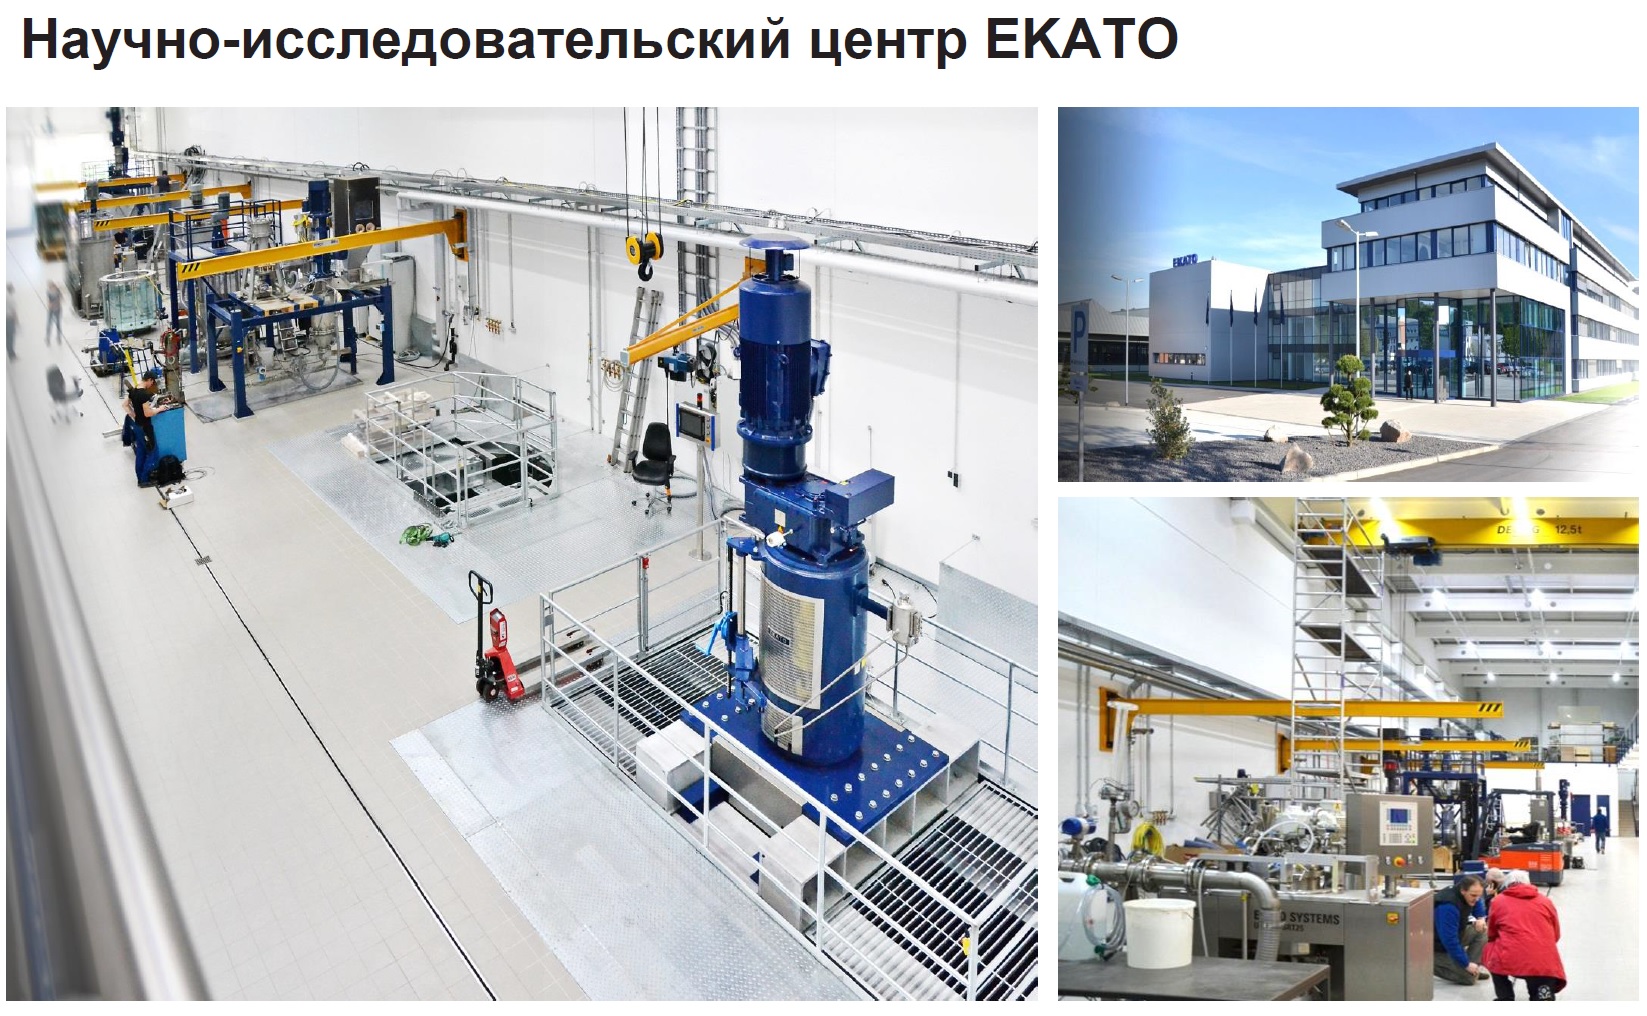 ekato industry3.jpg